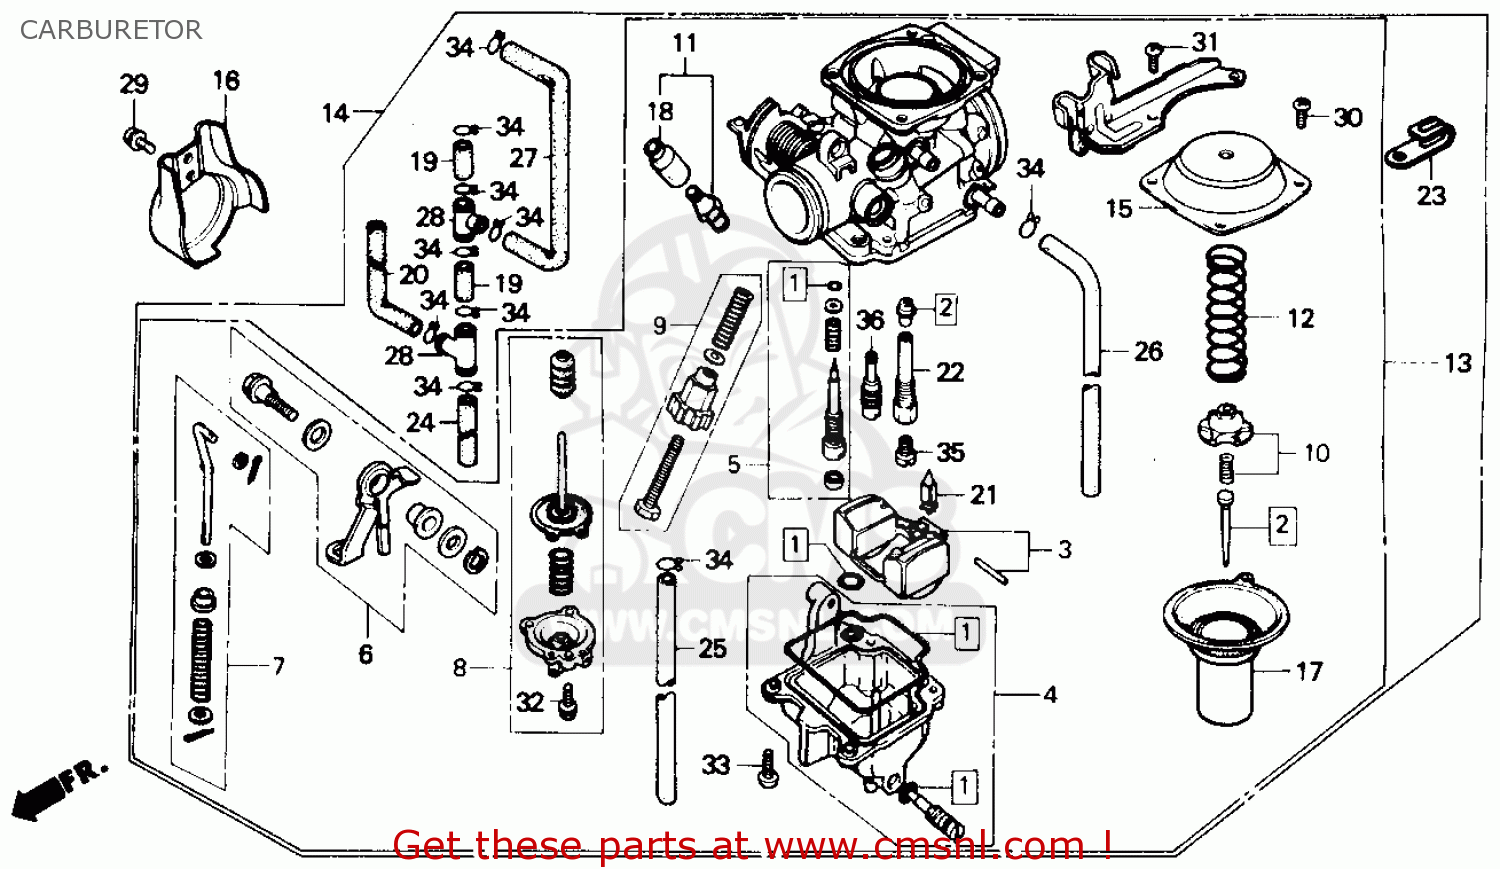 Honda rebel schematics #2